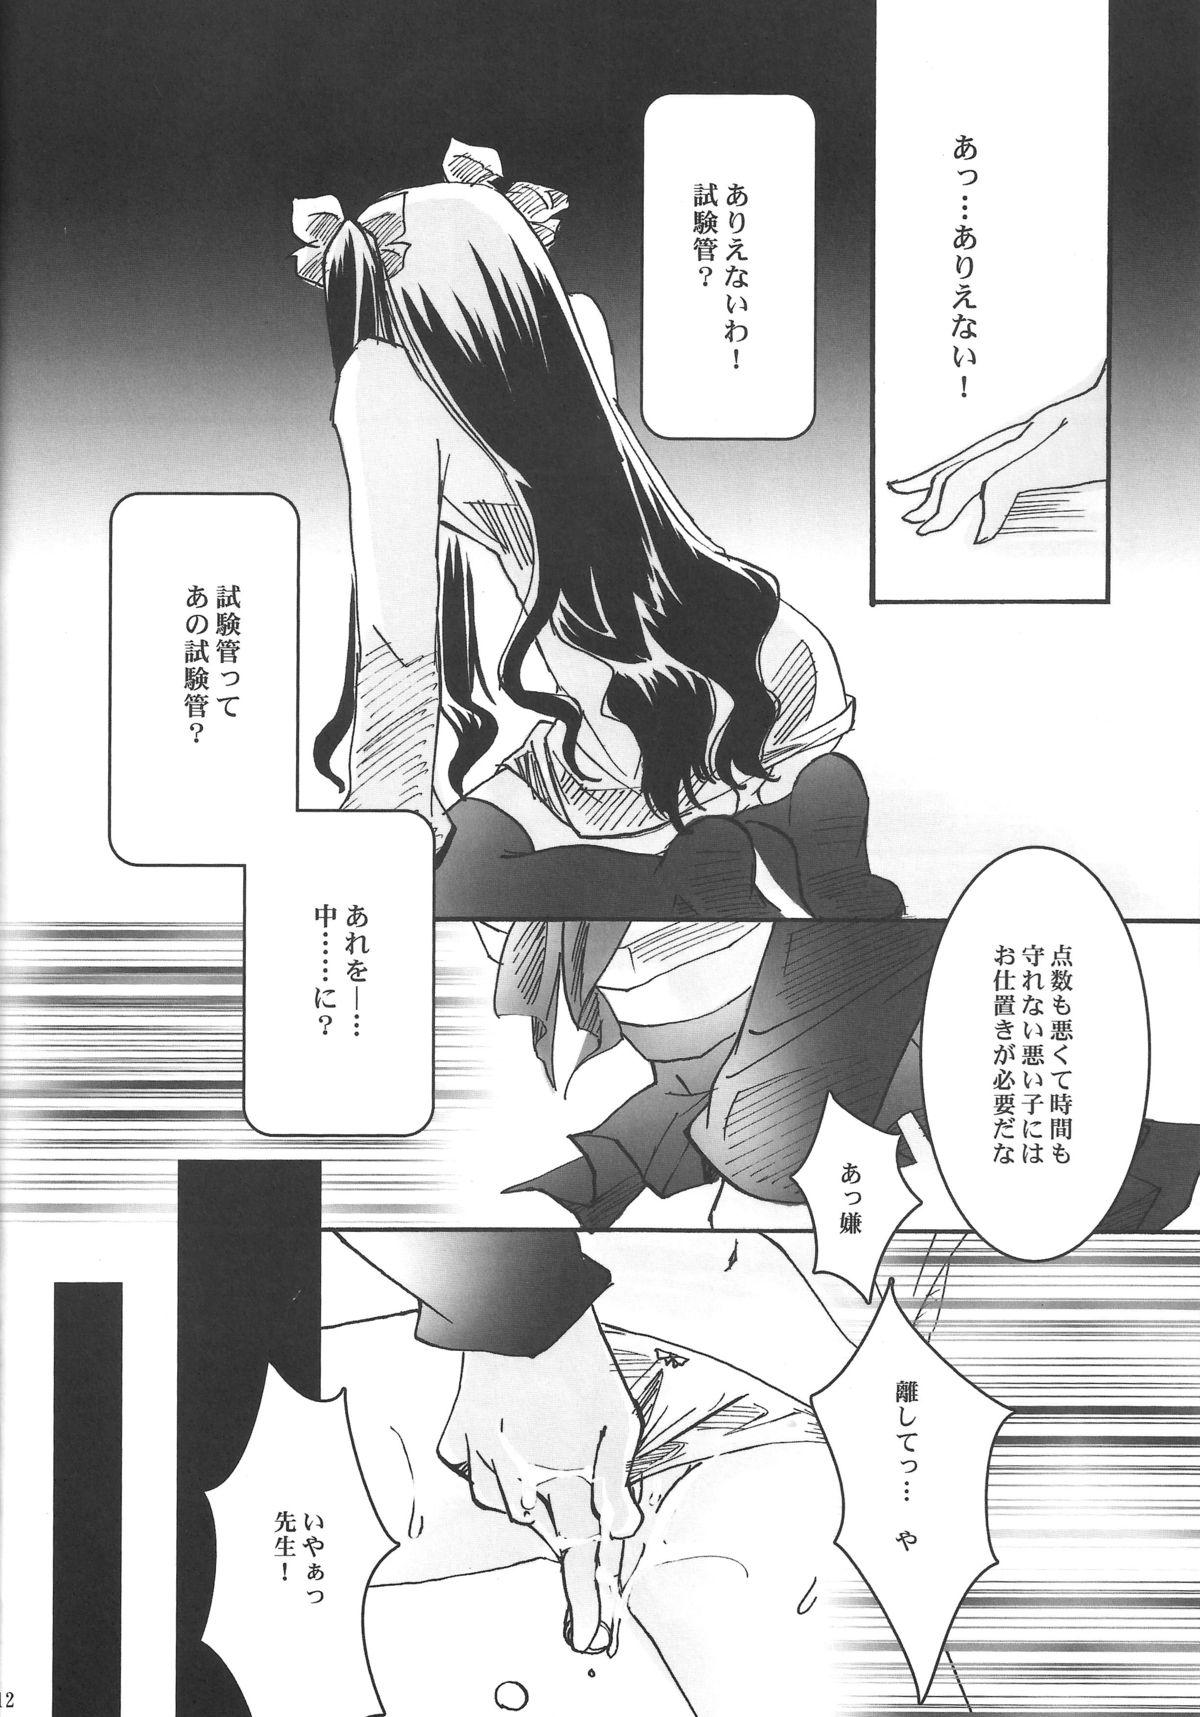 Messy Himitsu Nikki 1 - Fate stay night Coeds - Page 10